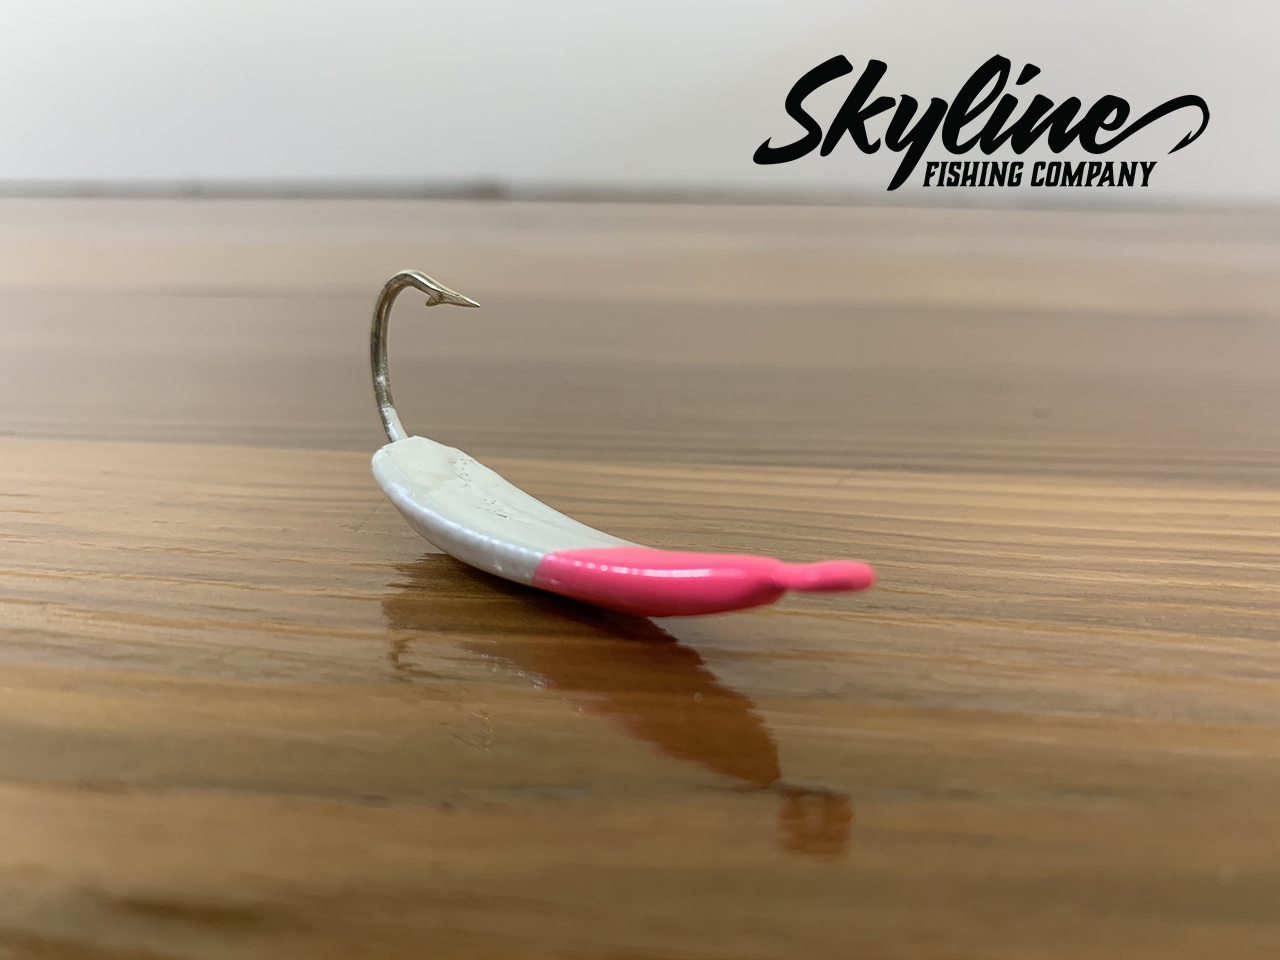 Skyline Wacky Jumper Pompano Jigs - Skyline Fishing Company